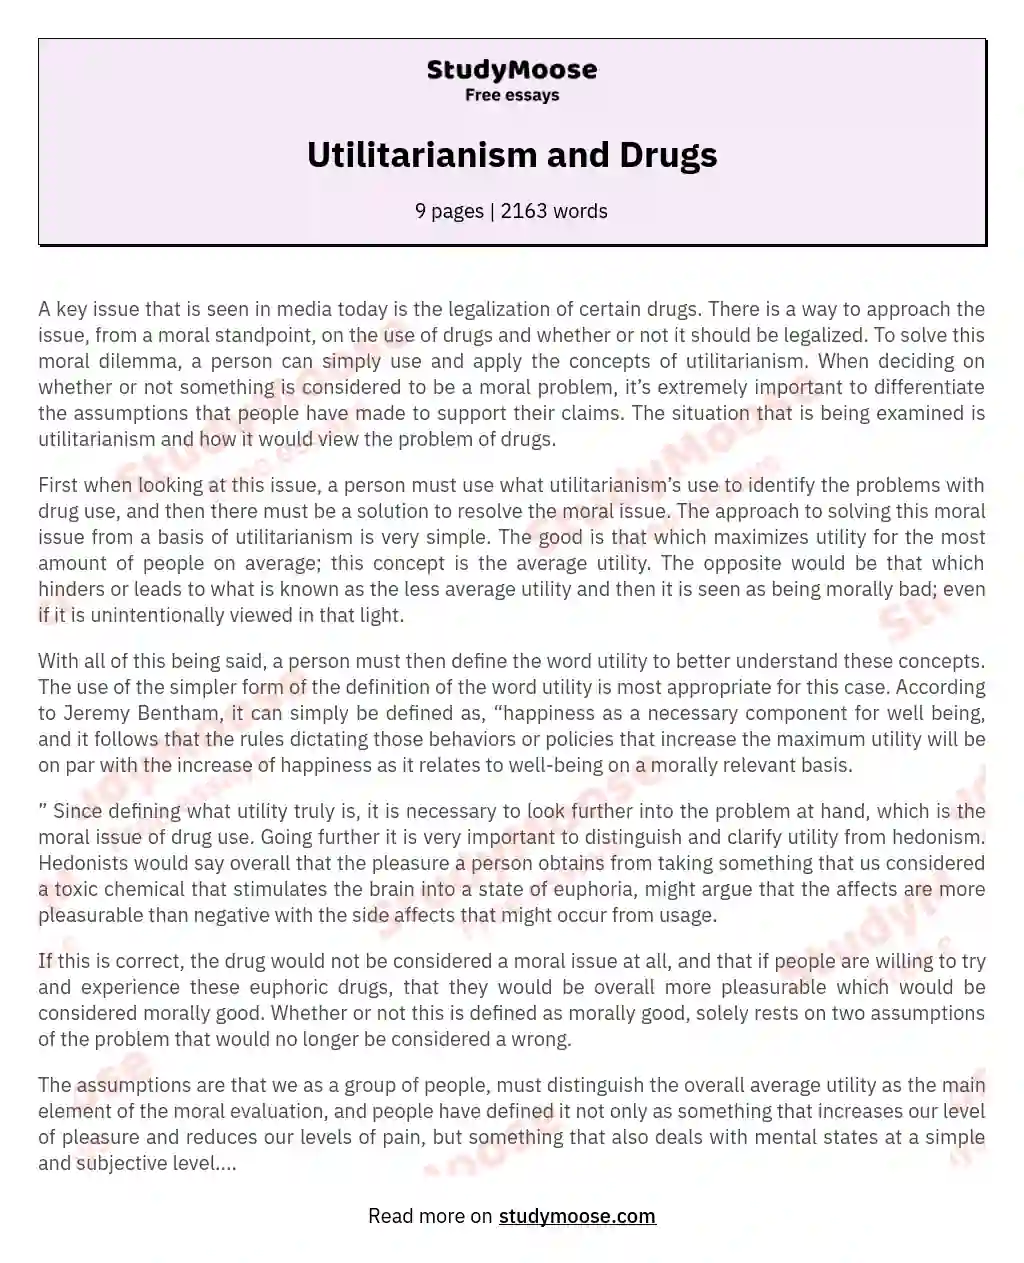 Utilitarianism and Drugs essay